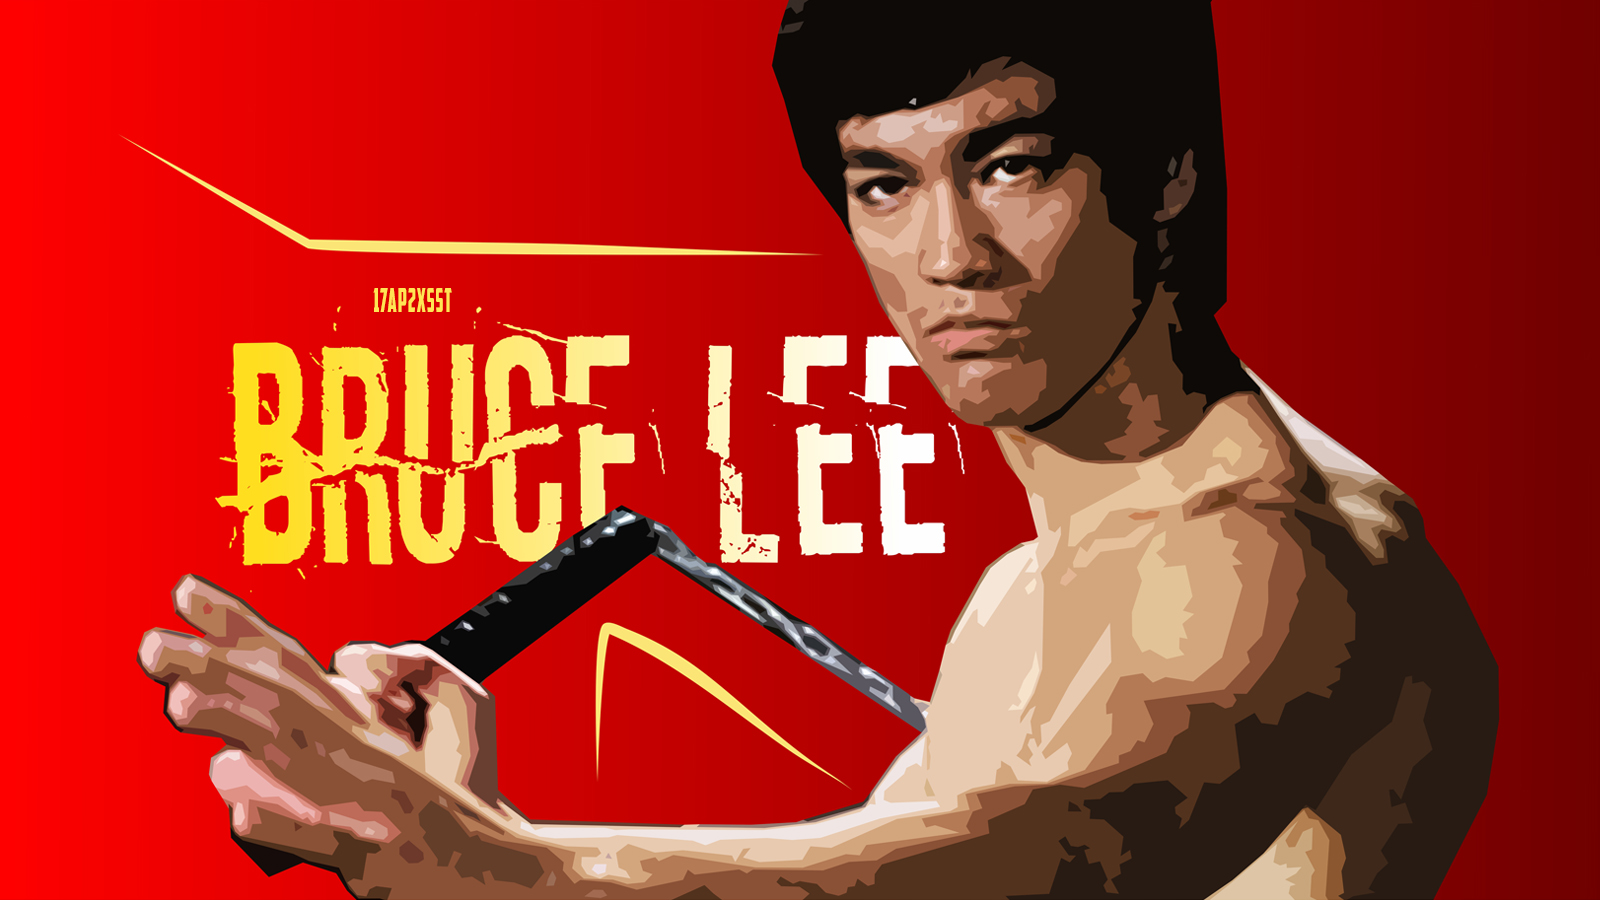 Bruce Lee Picture by zelko